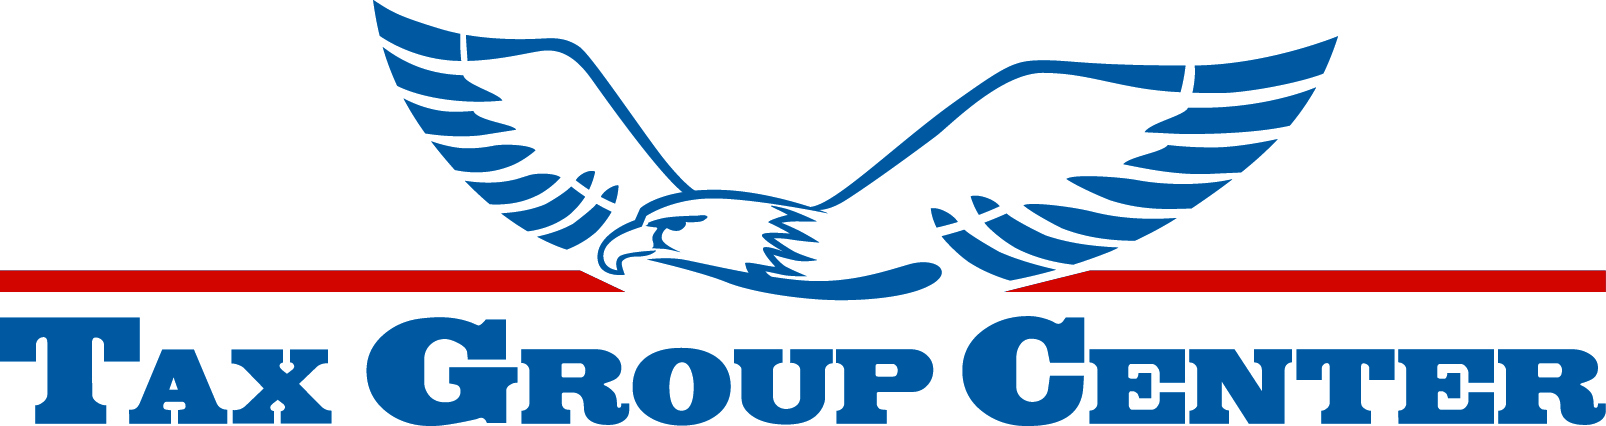 Tax Group Center_logo